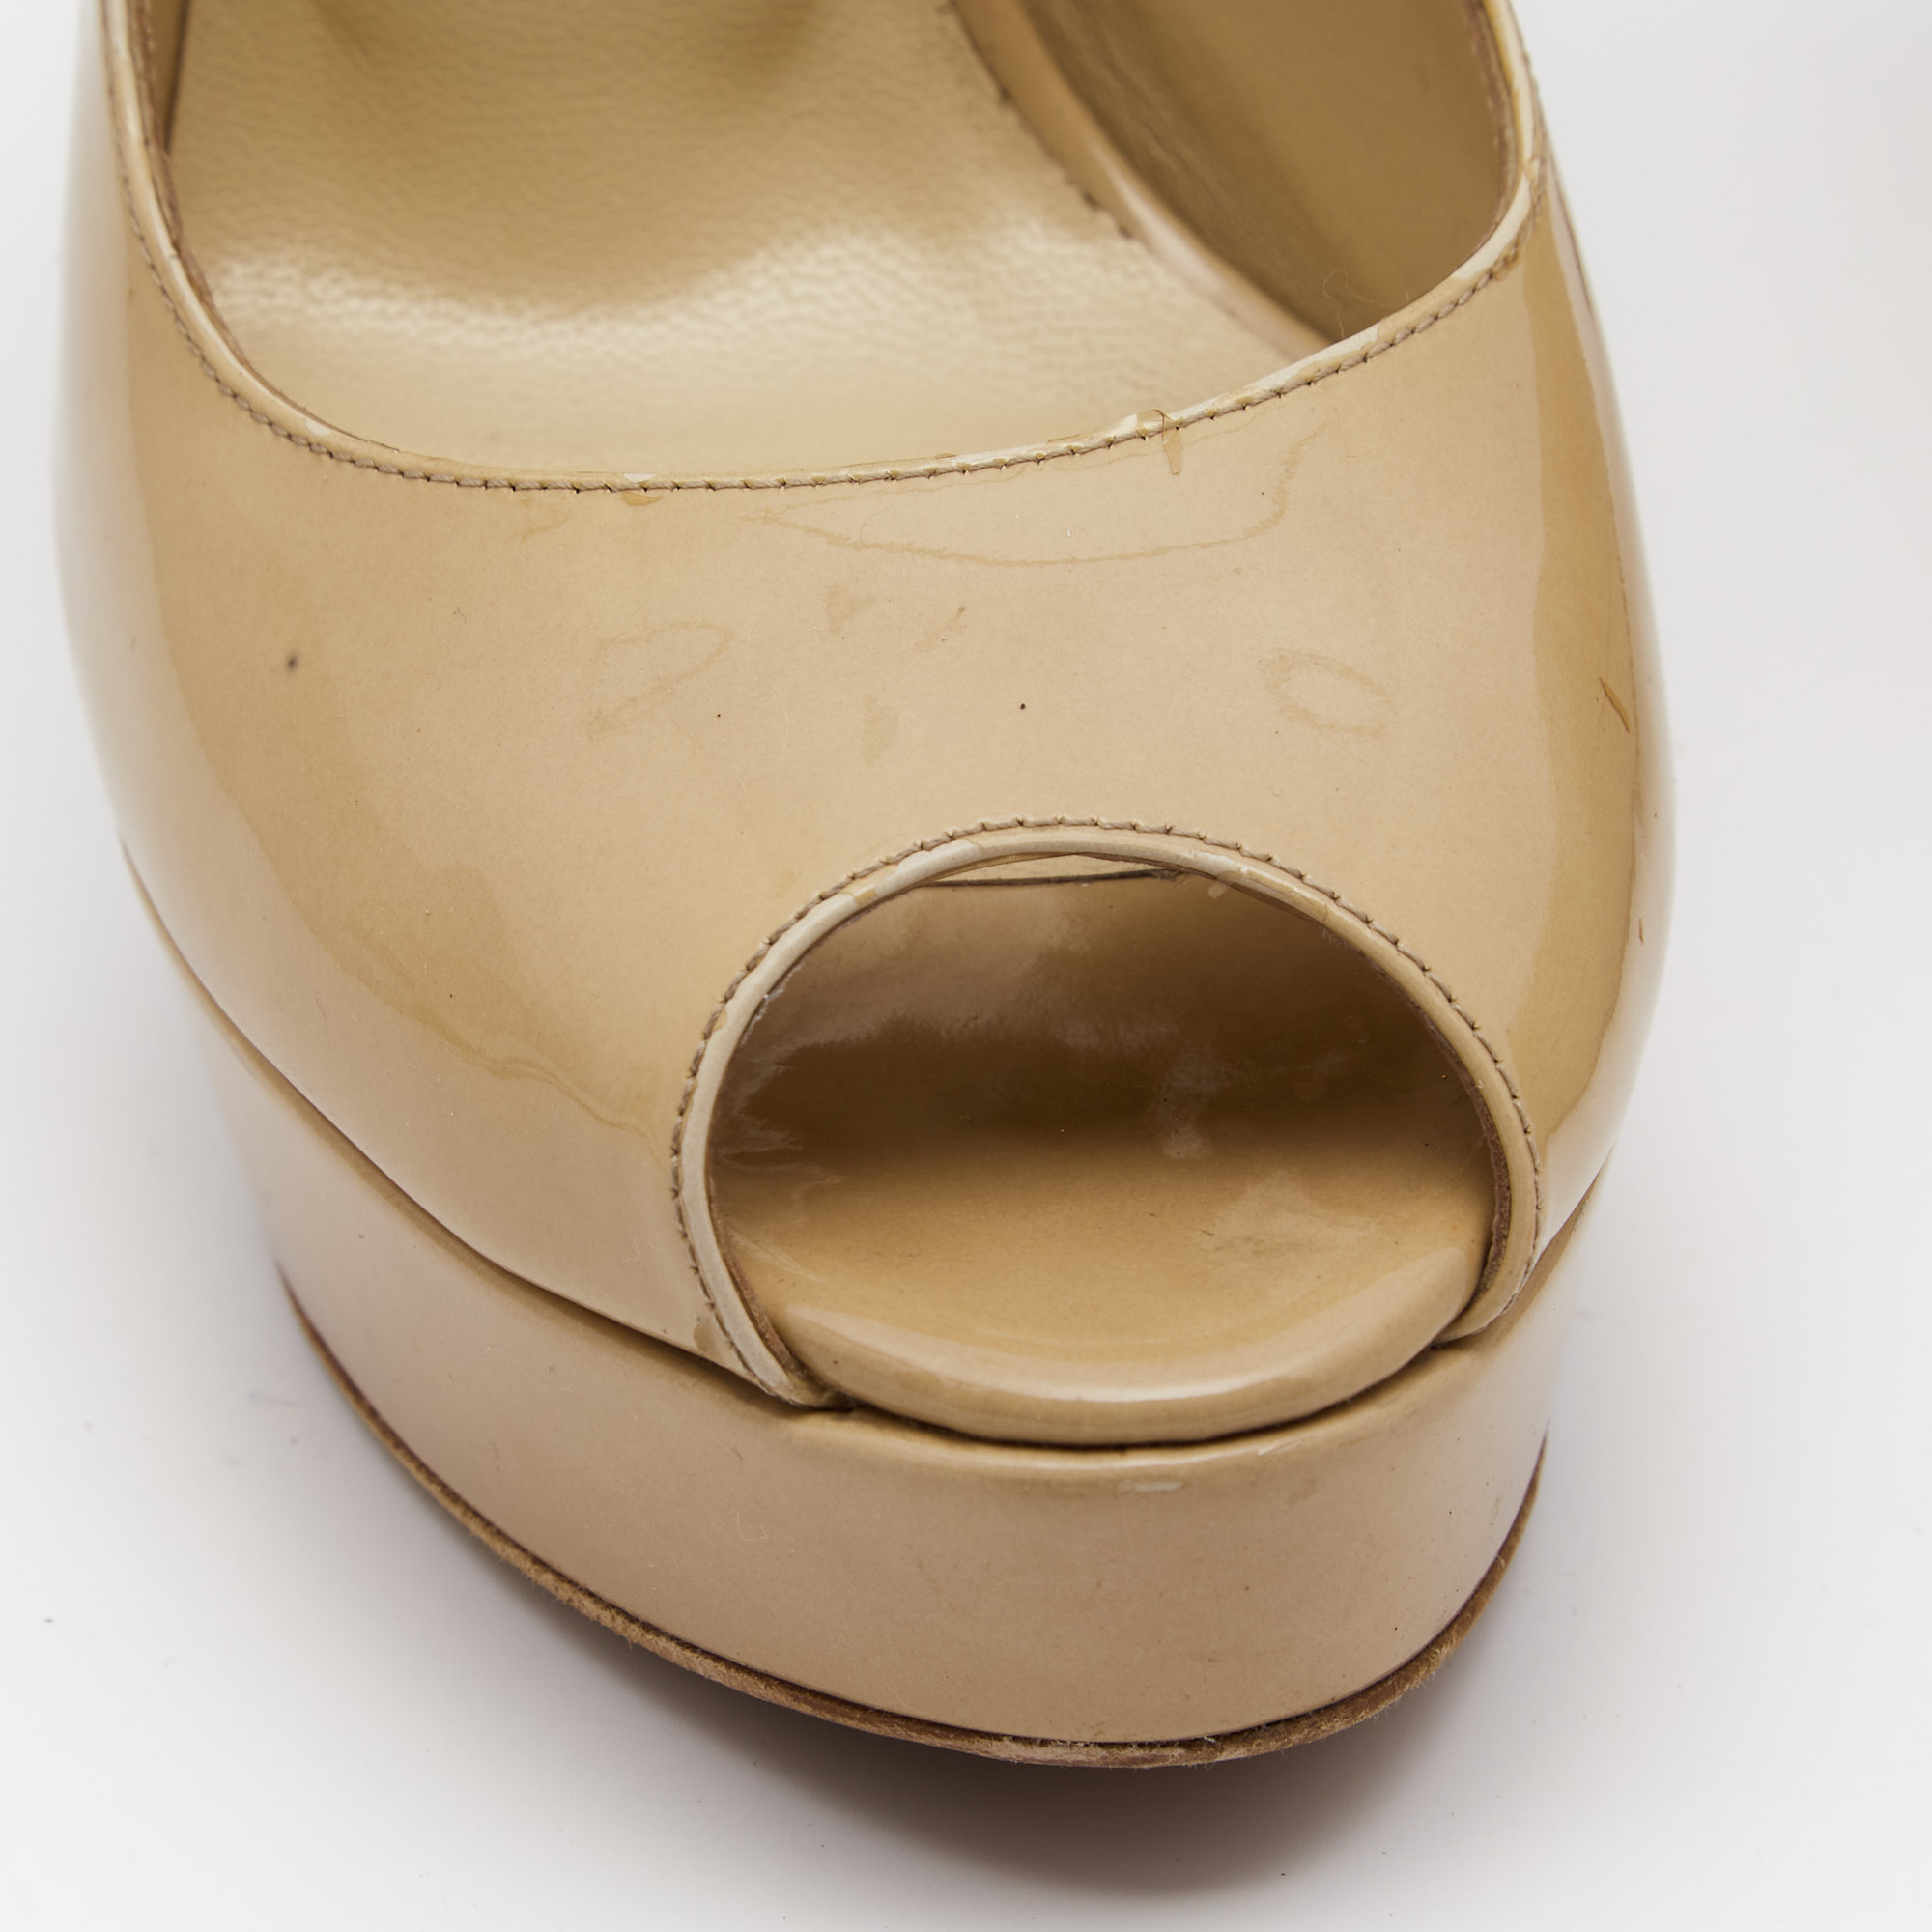 Jimmy Choo Beige Patent Leather Vita Peep Toe Platform Slingback Sandals Size 38.5